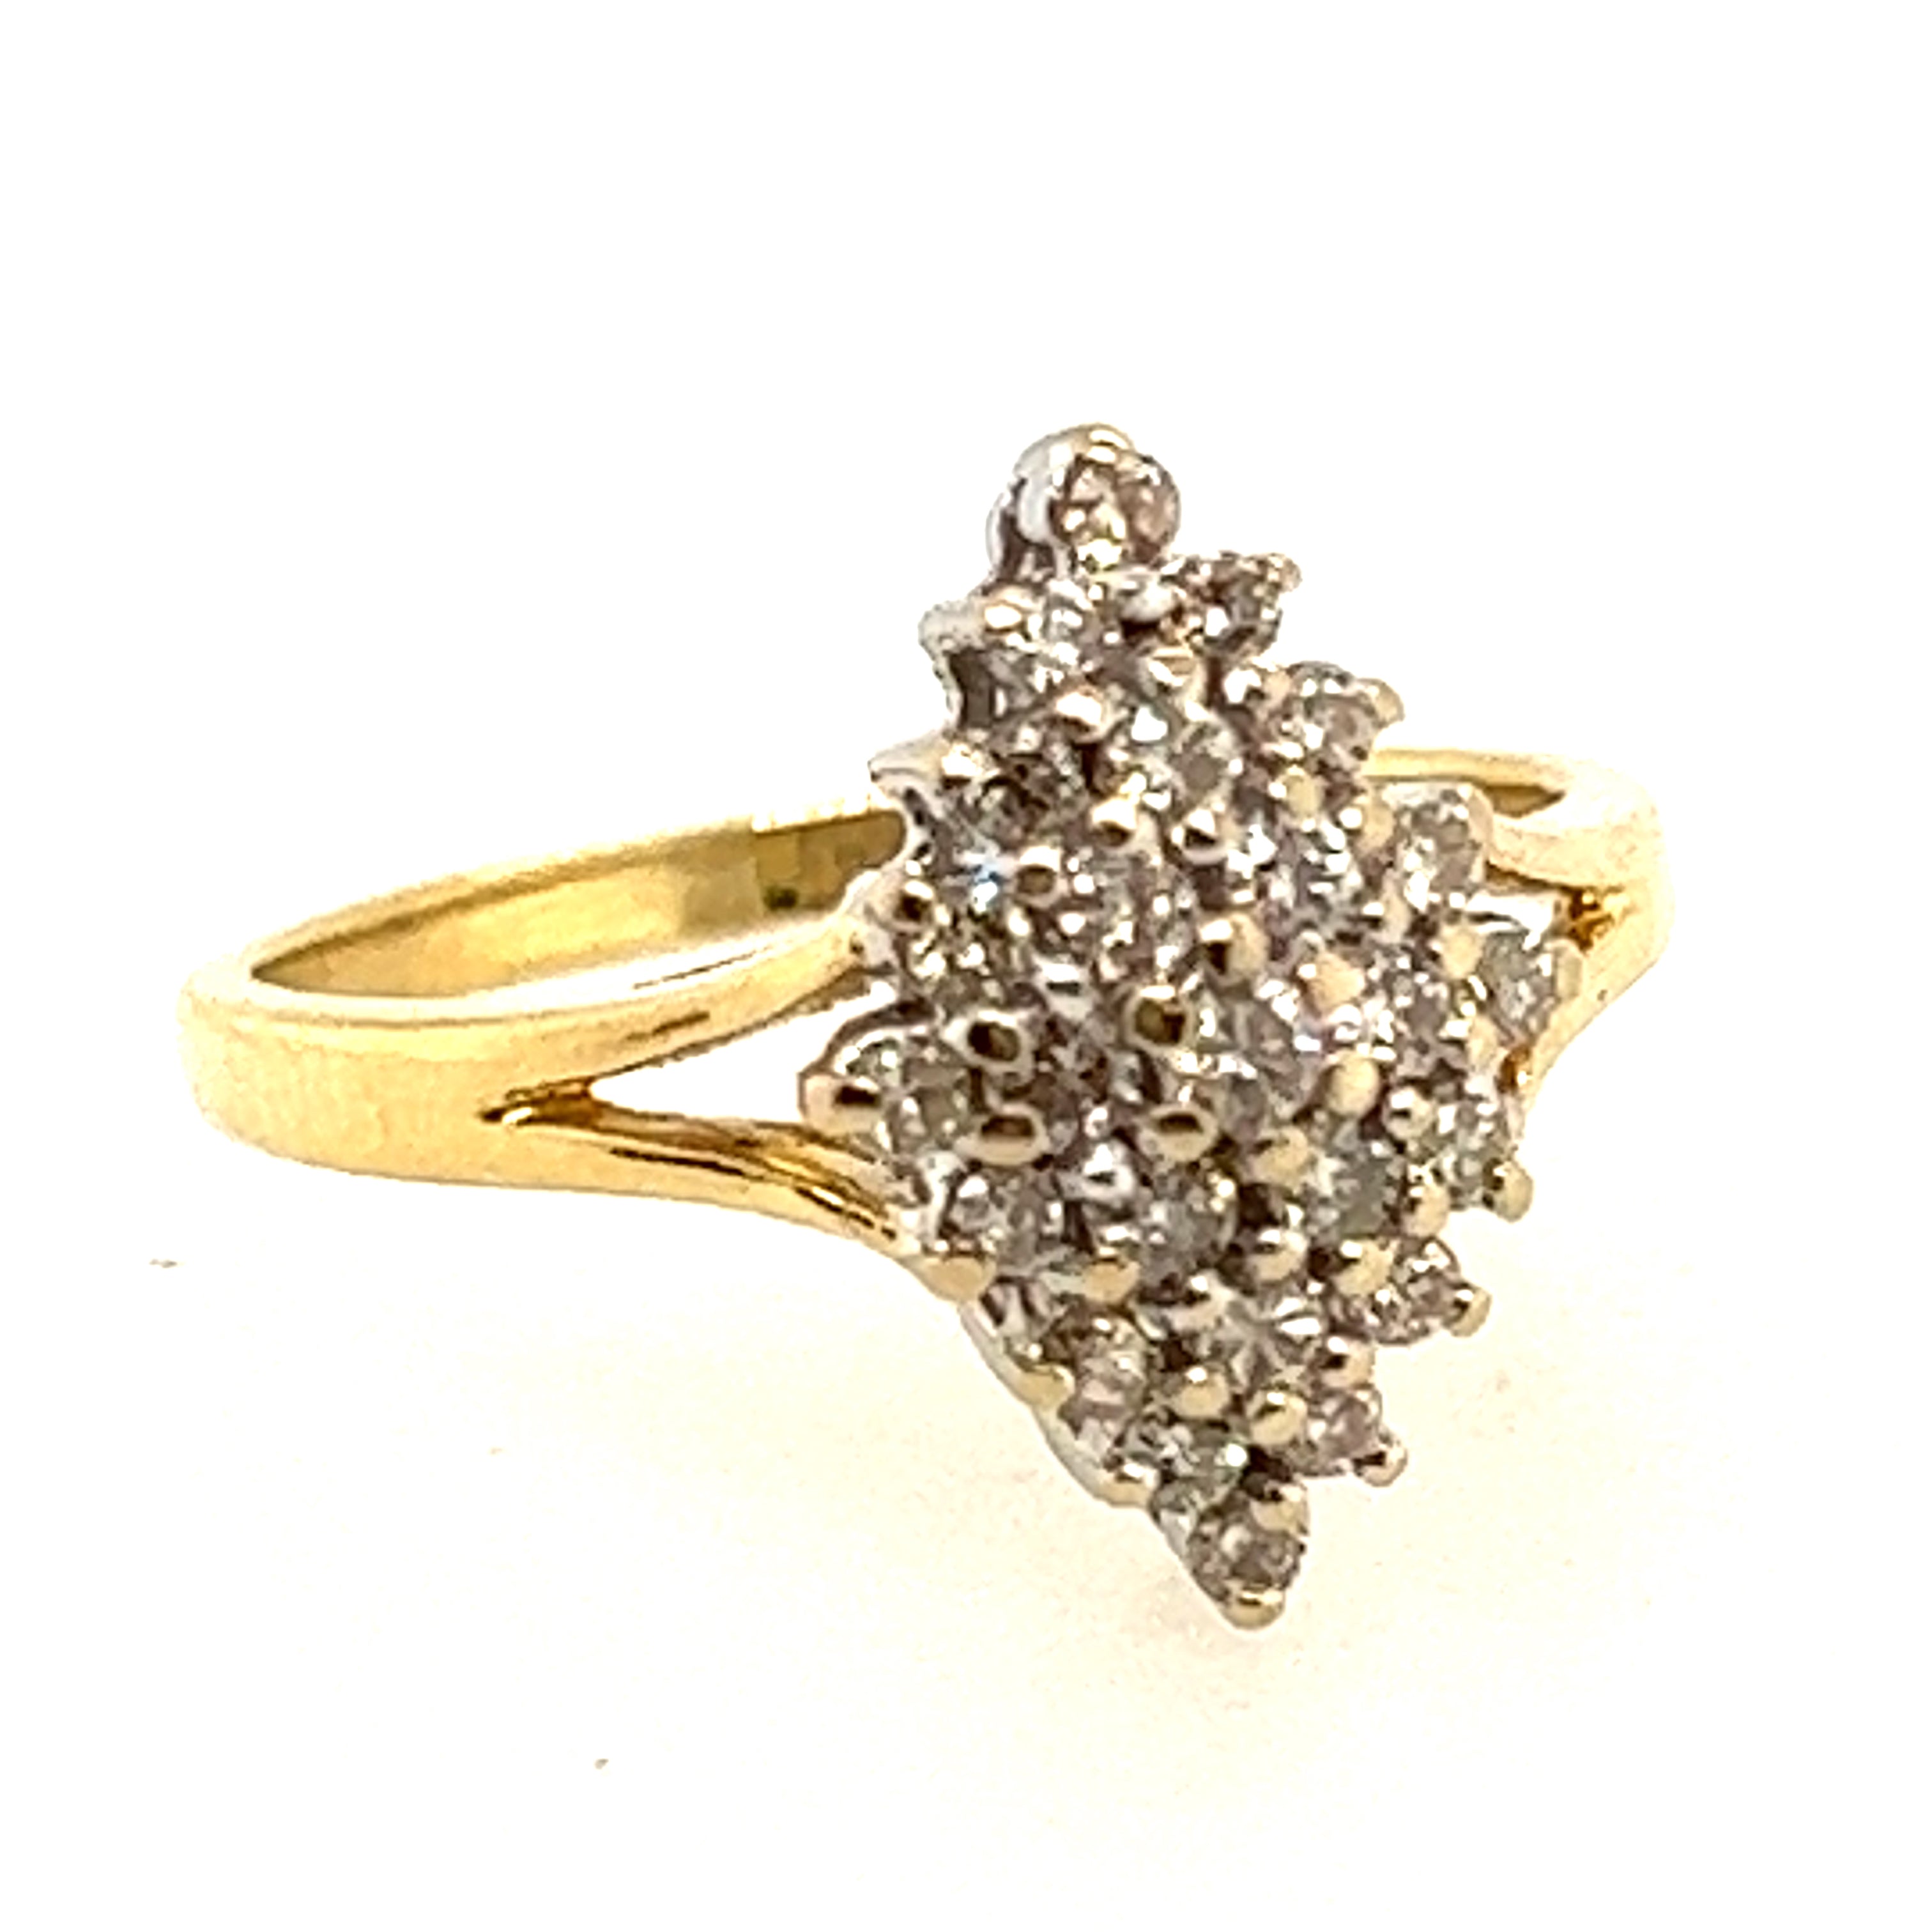 18ct Yellow Gold Diamond Ring